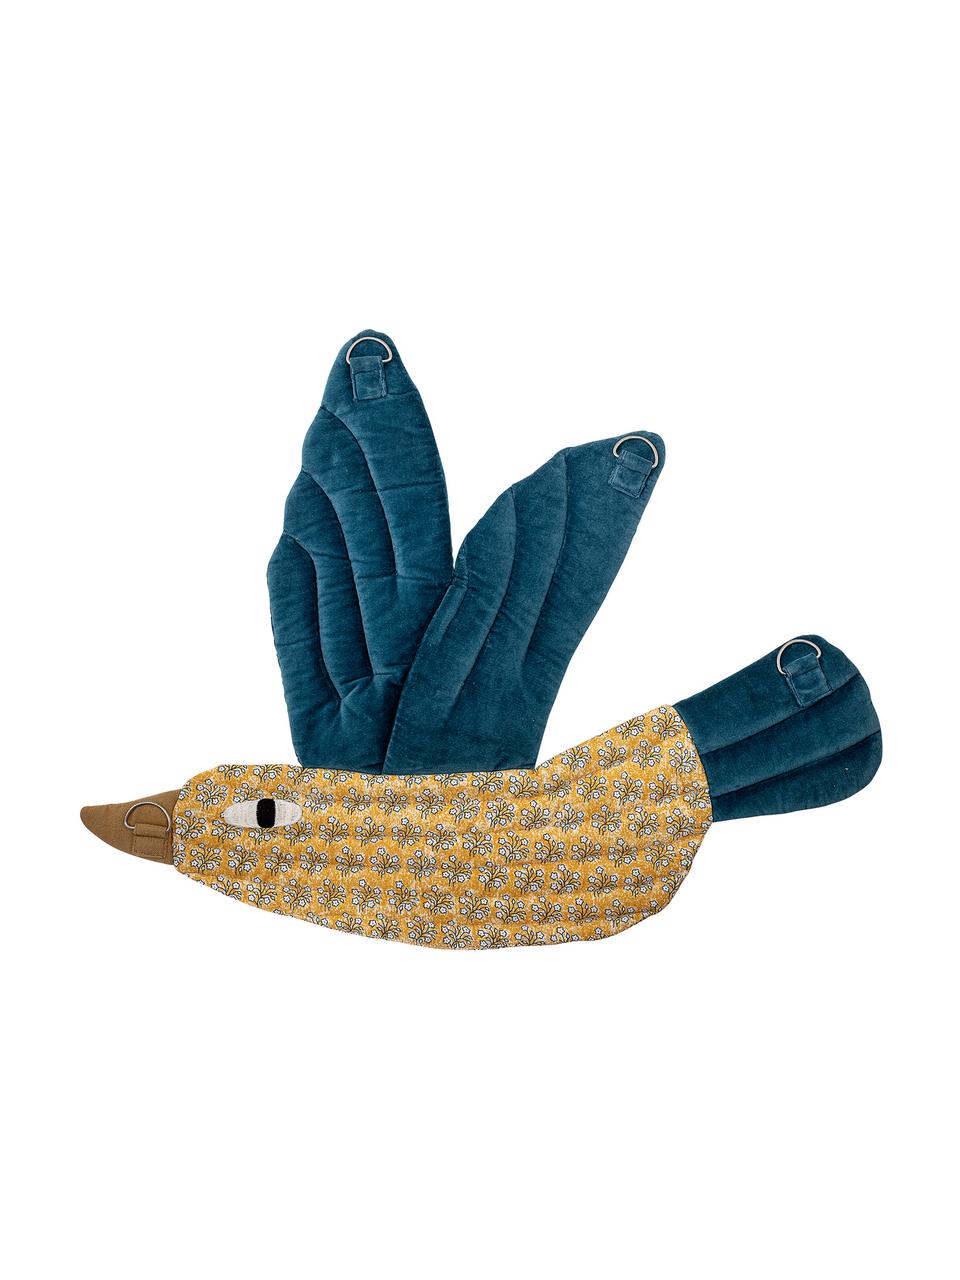 Wandobjekt Blue Bird, Bezug: Baumwolle, Gelb, Blau, Braun, Weiß, 62 x 52 cm